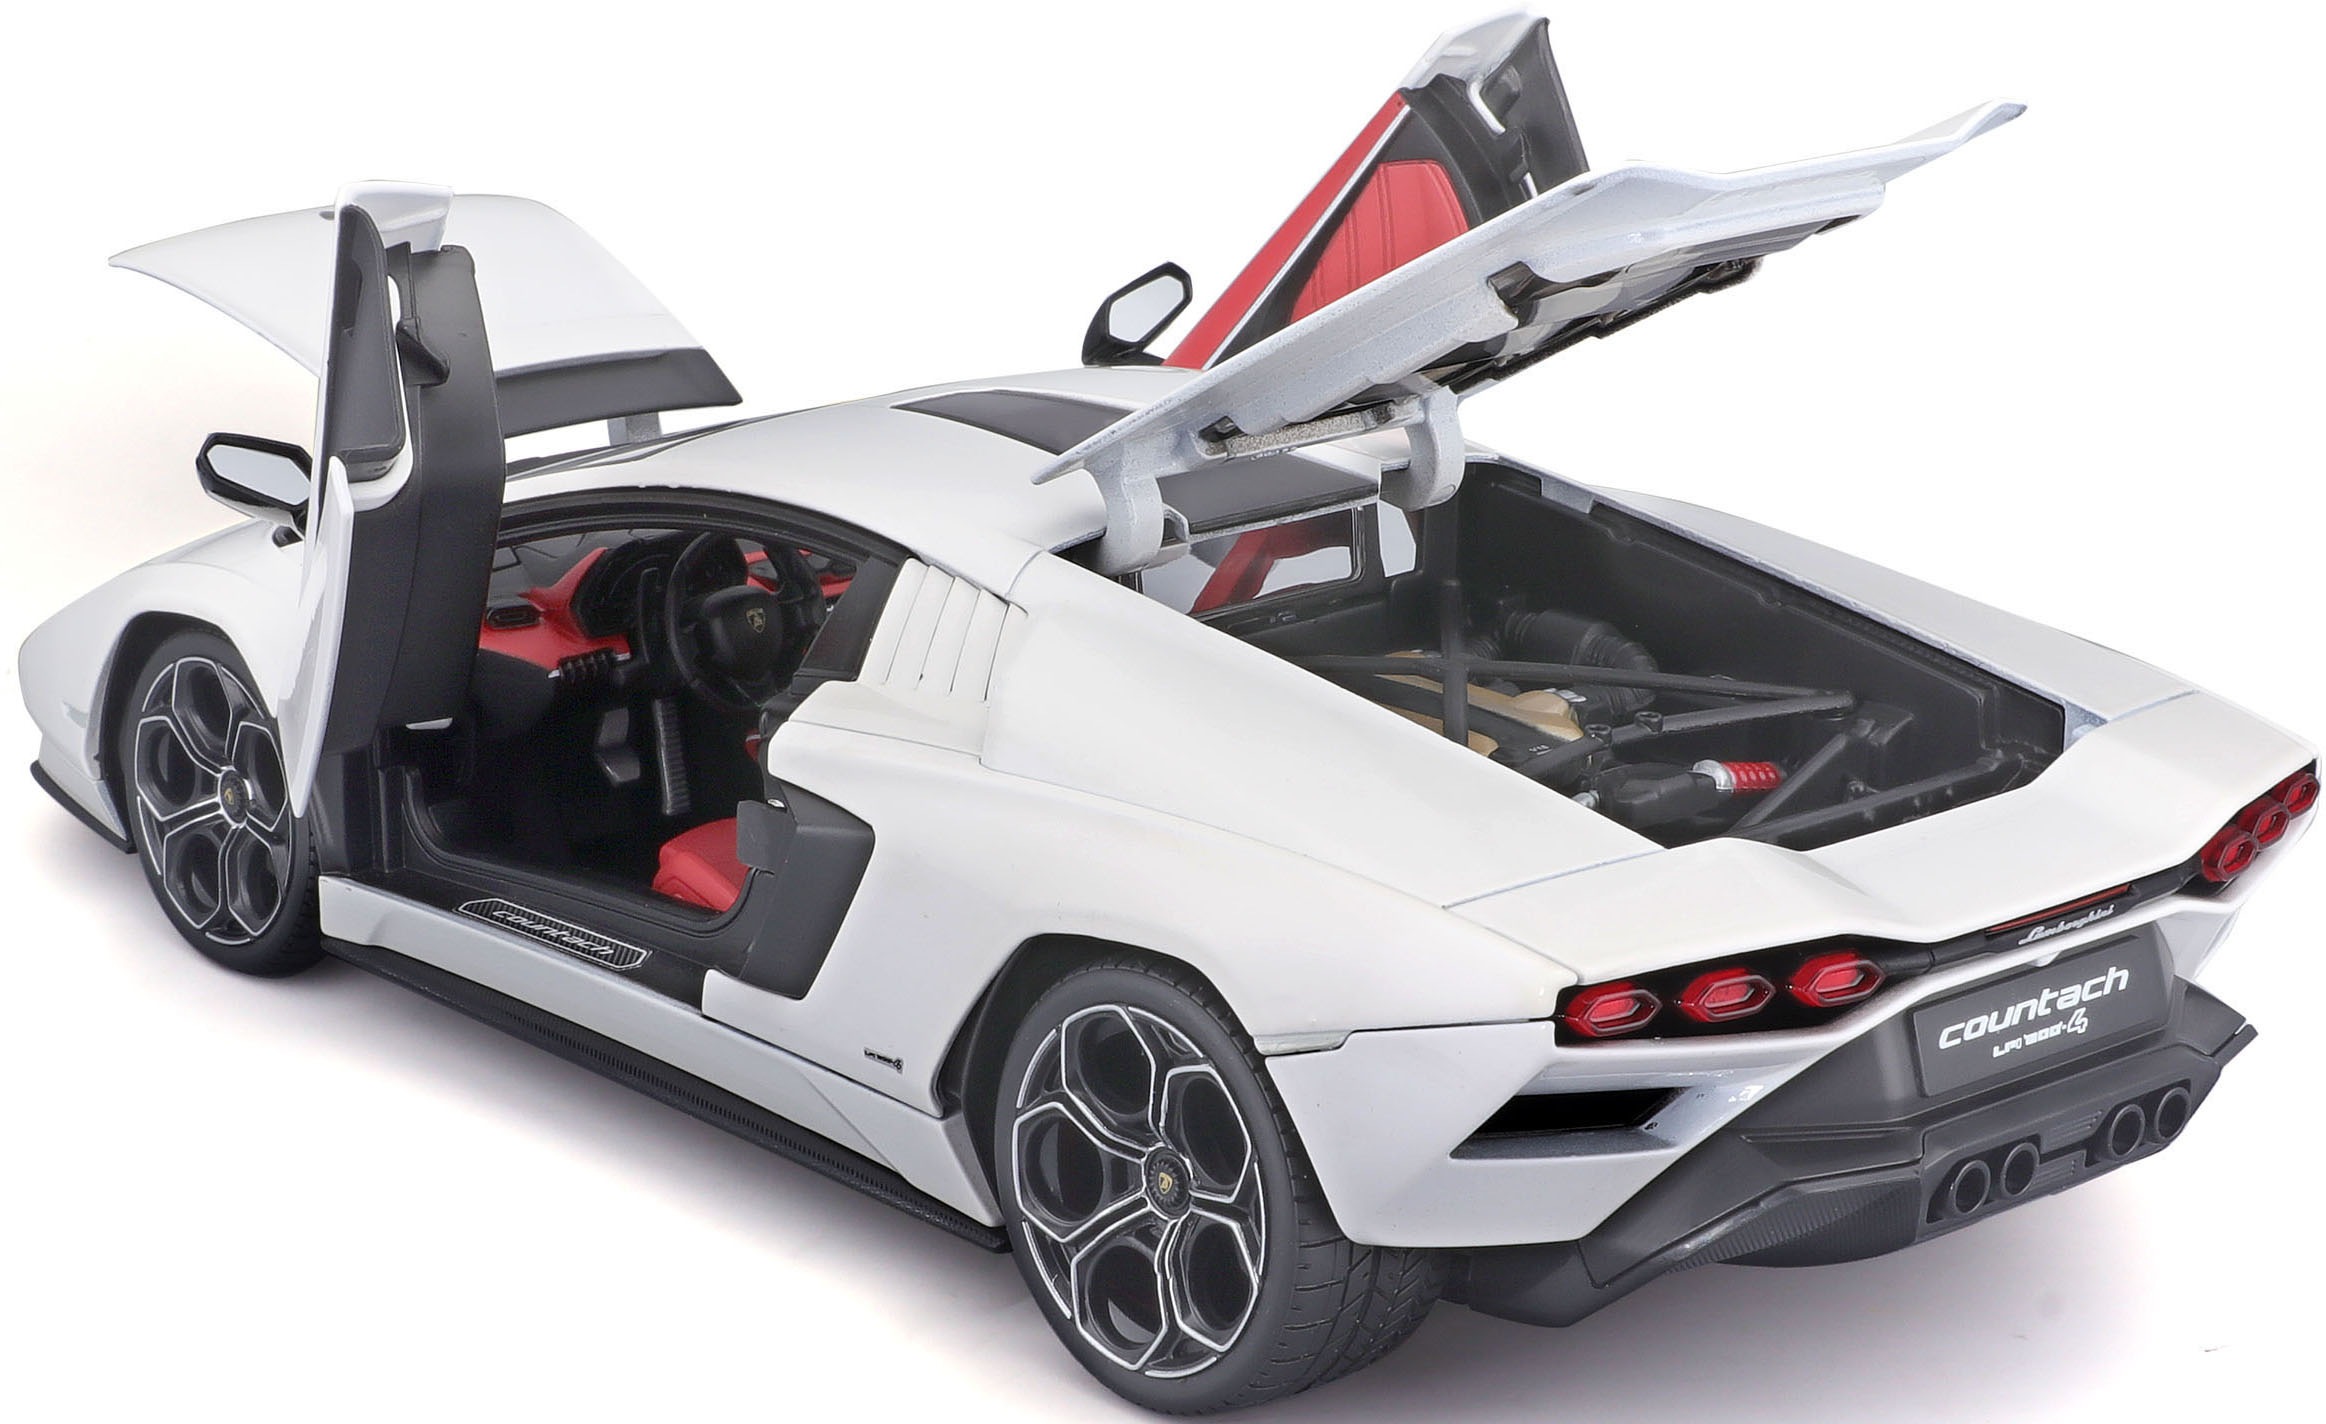 Maisto® Modellauto »Lamborghini LPI 800-4, weiß«, 1:18